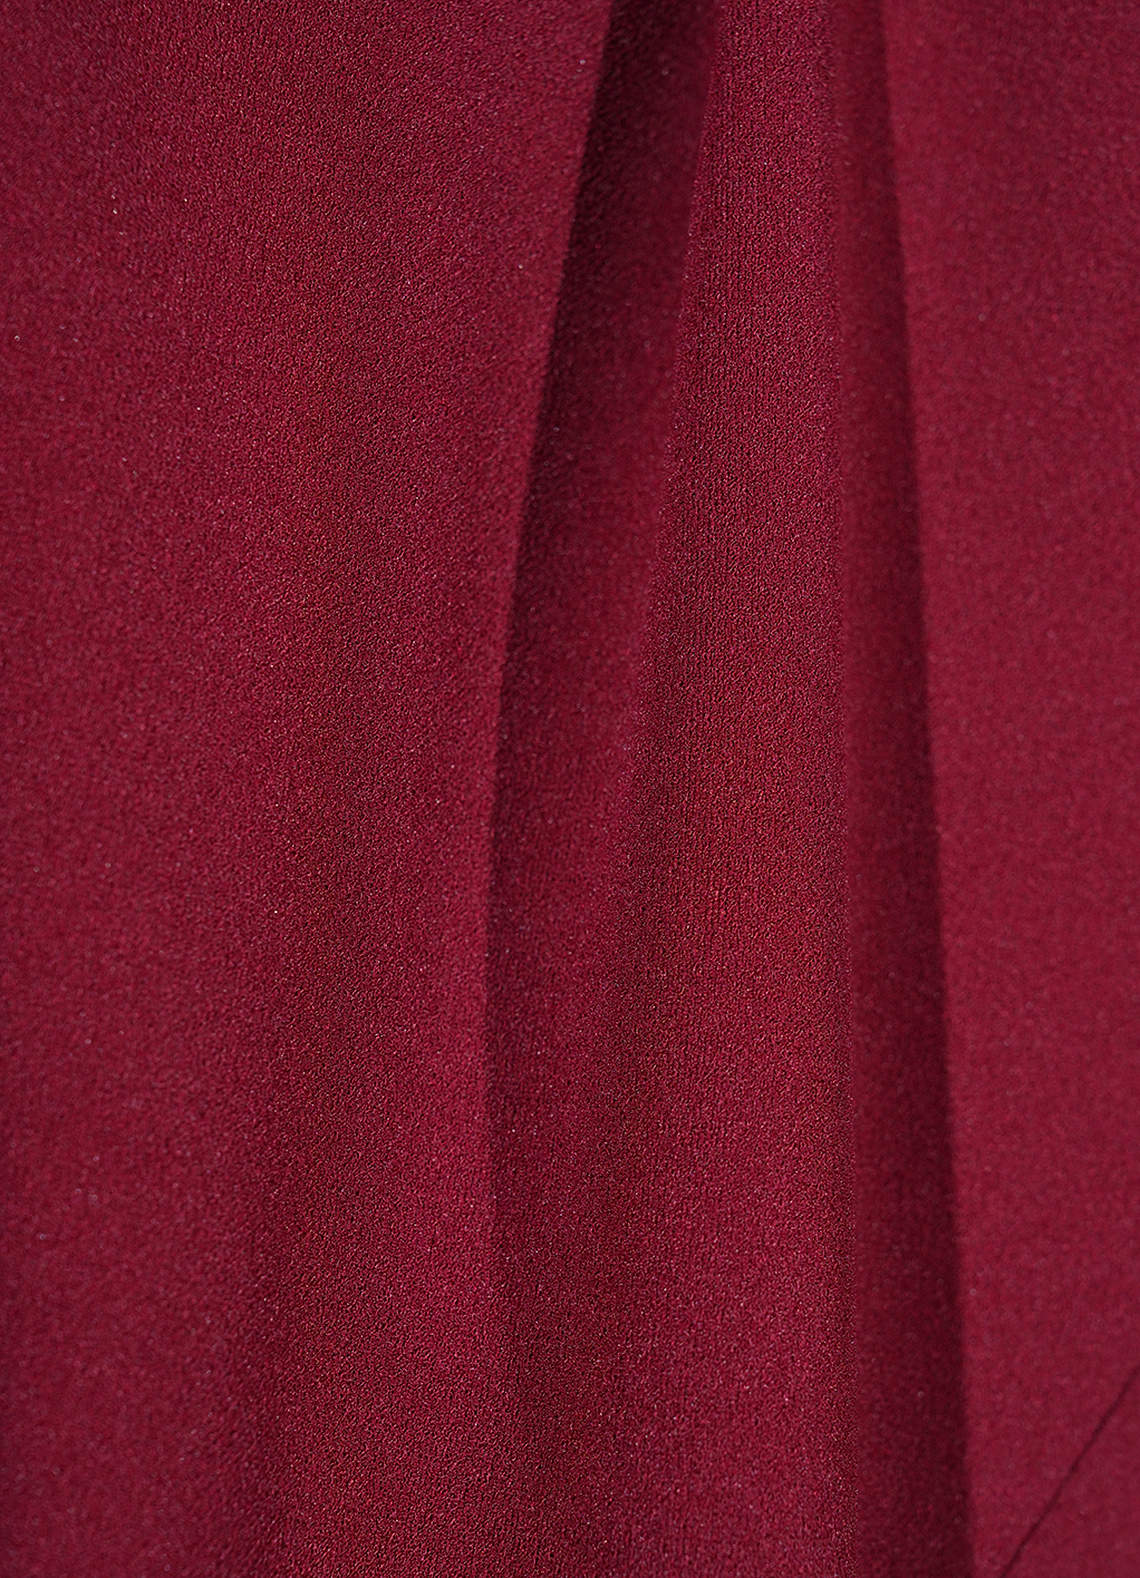 Aspen Burgundy Satin Long Sleeve Midi Dress image1